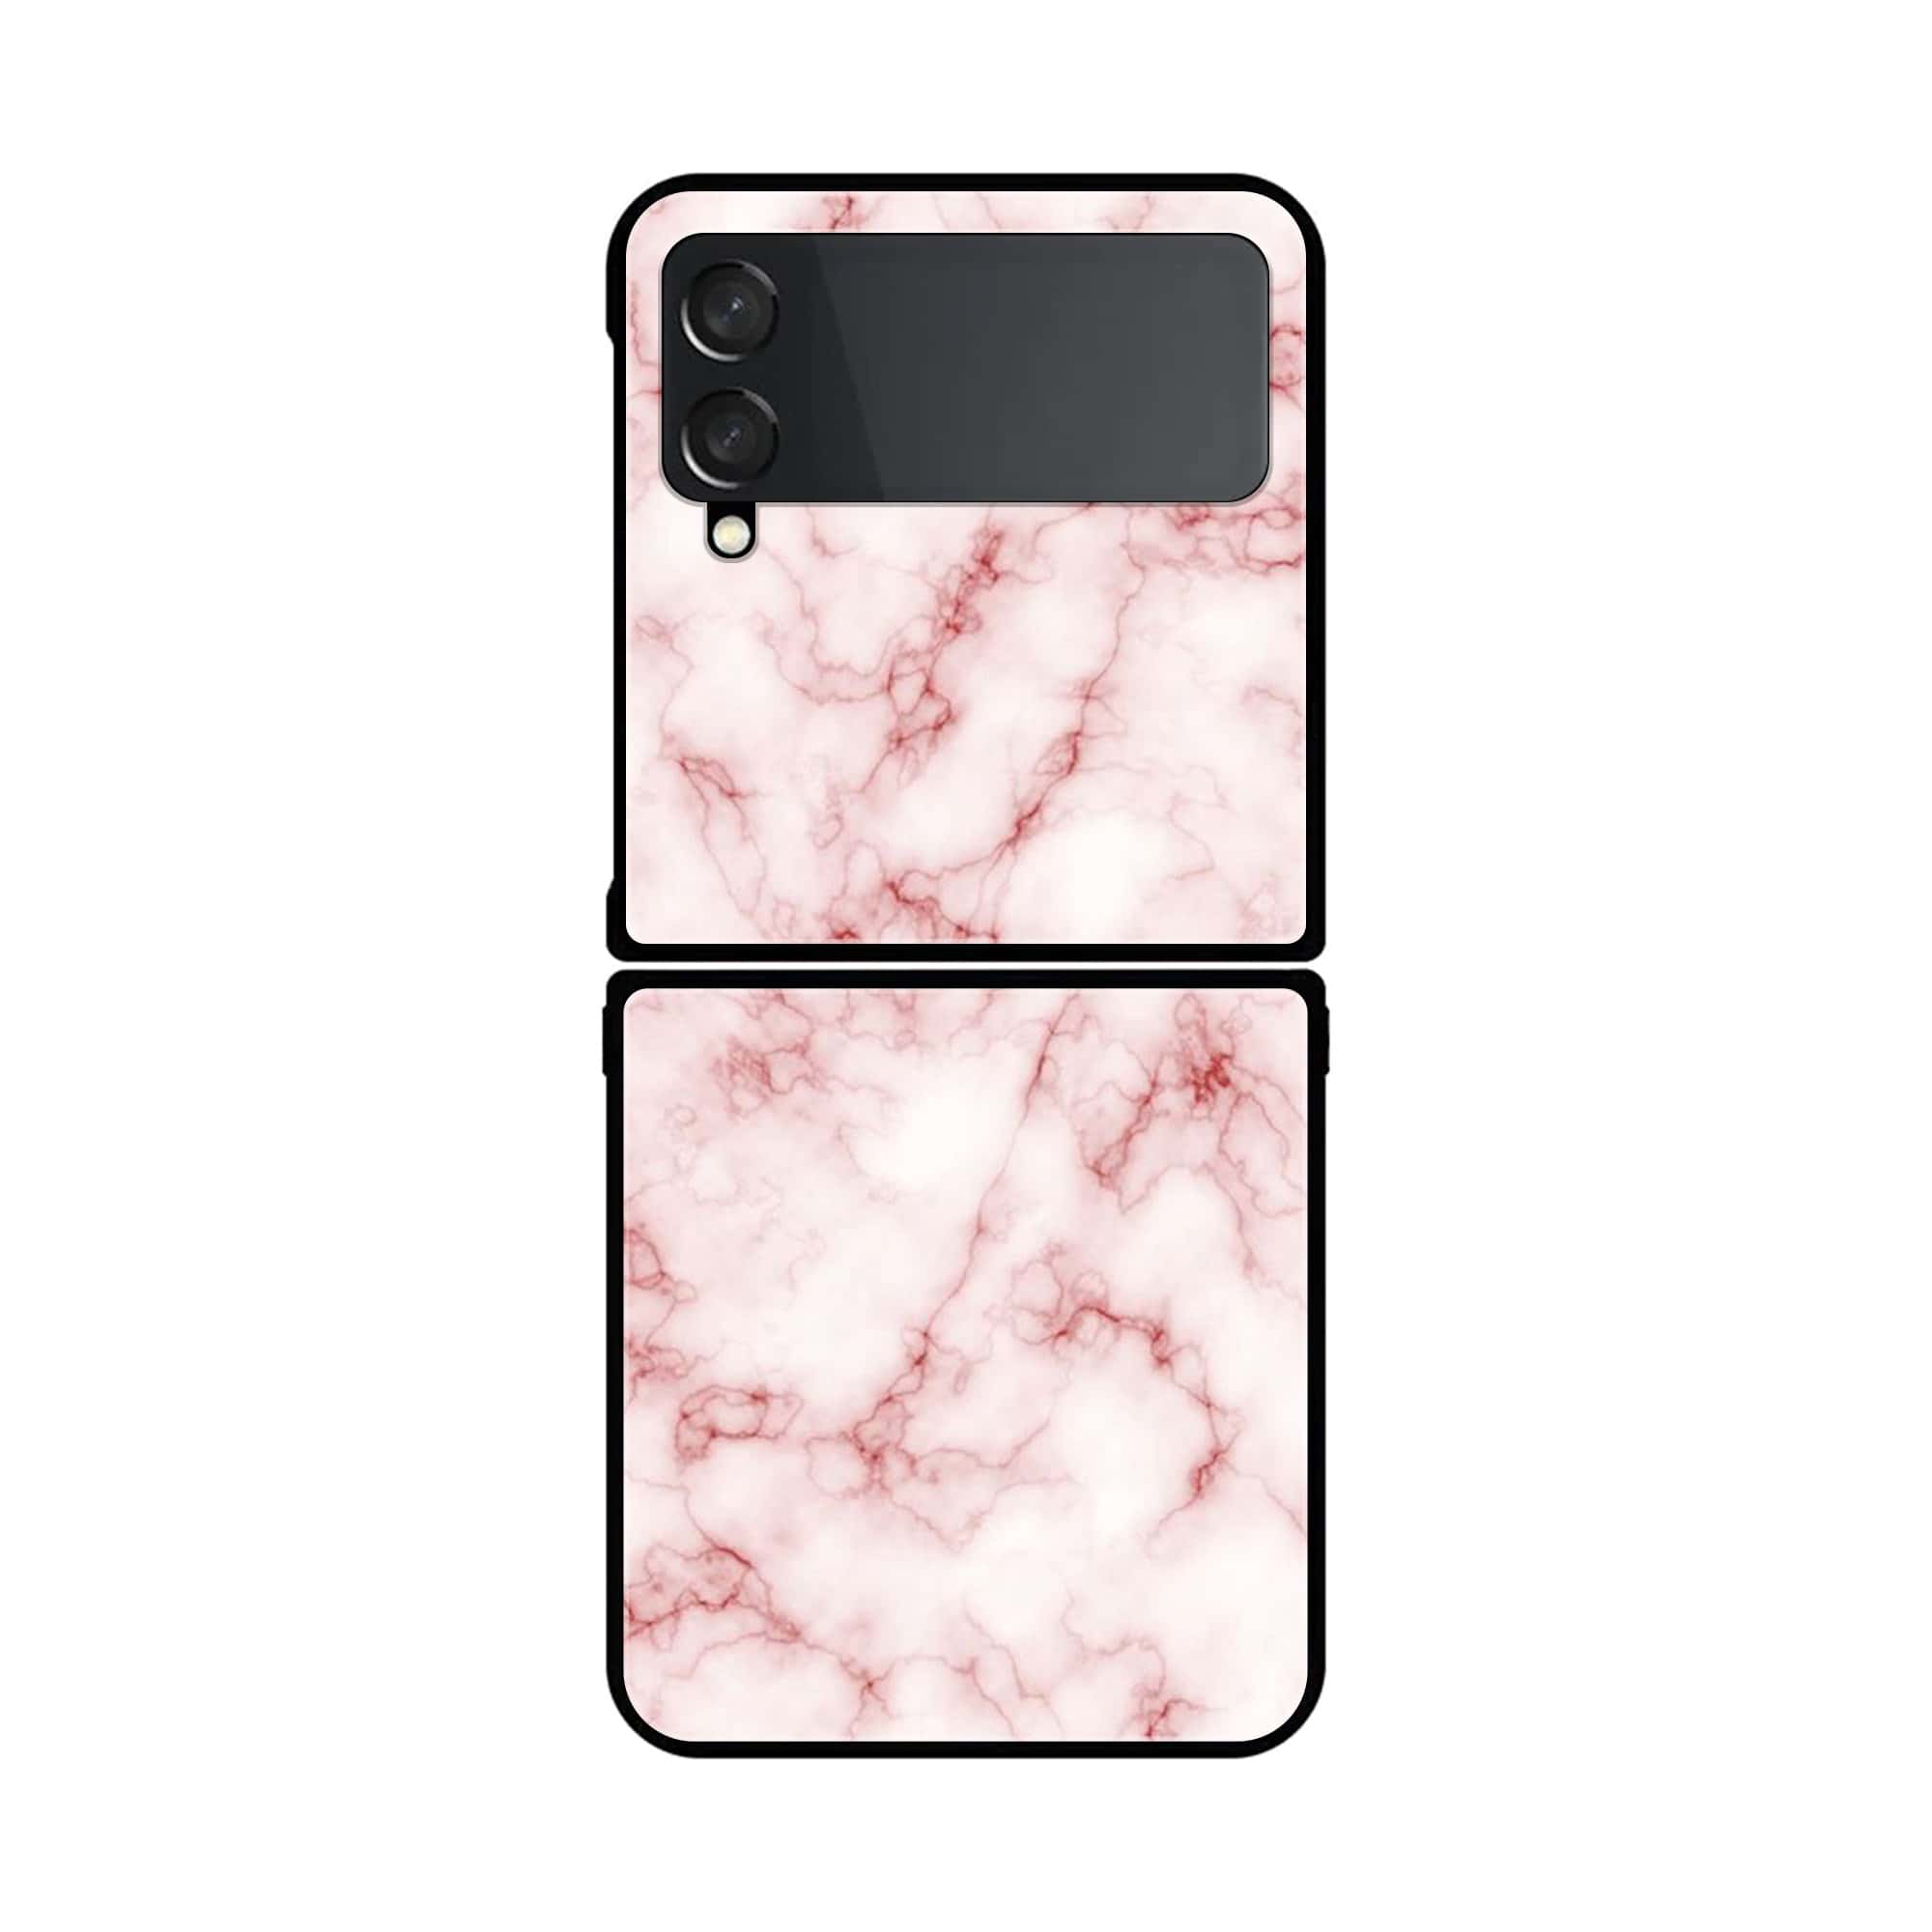 Z Flip 4- Pink Marble Series -  Premium Printed Glass soft Bumper shock Proof Case